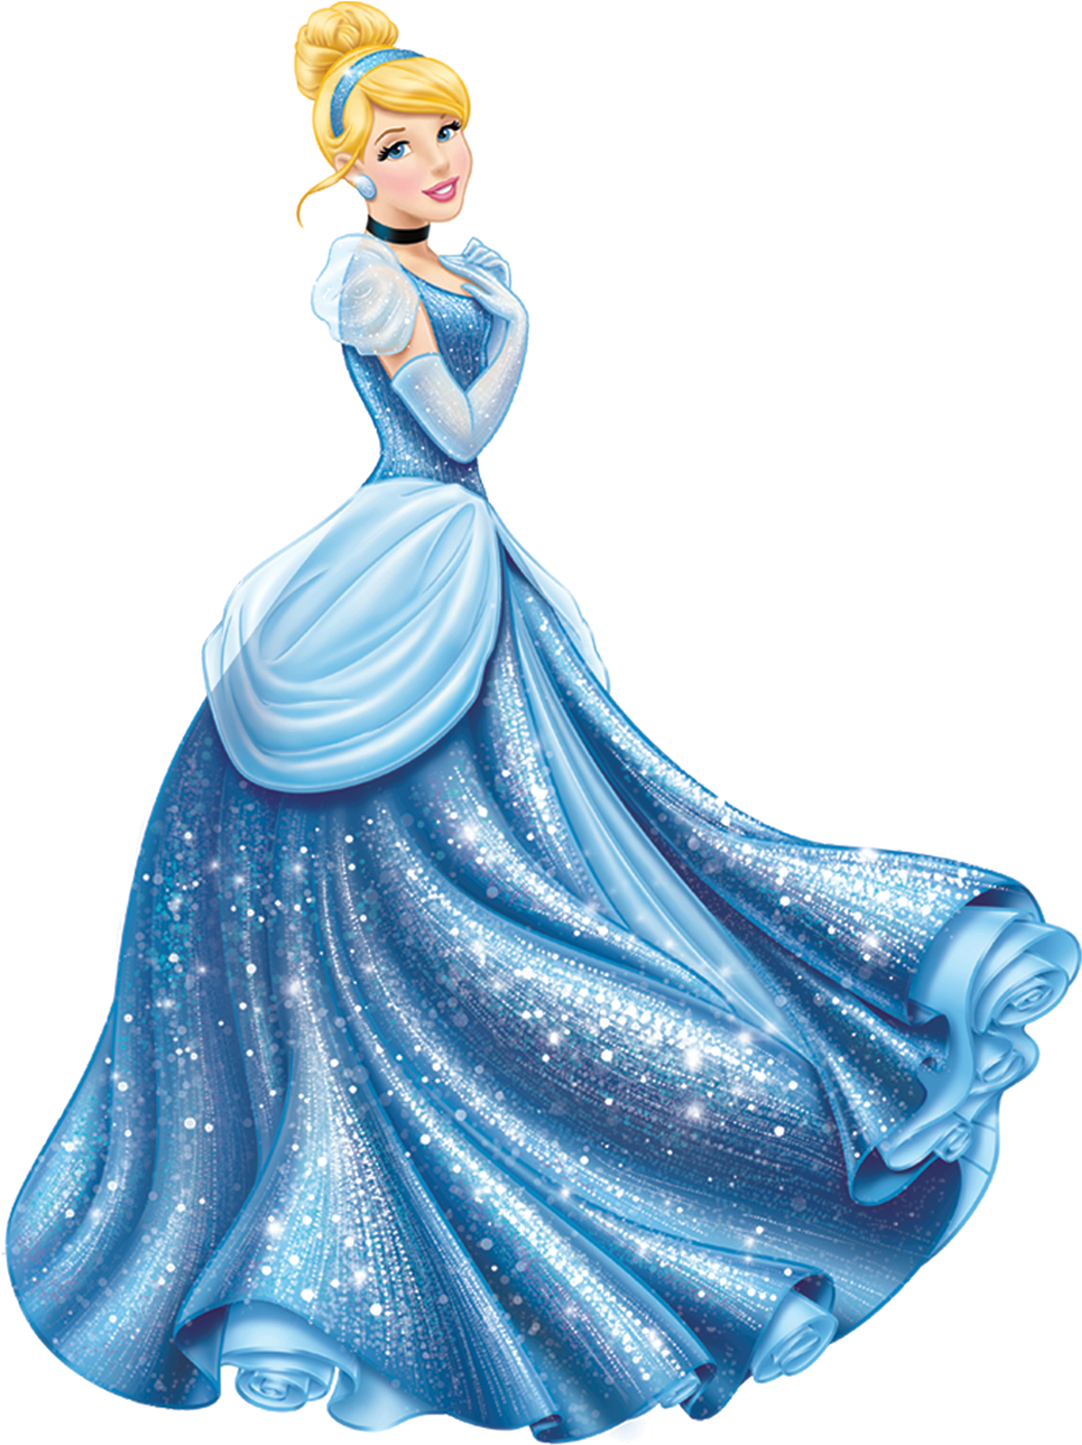 A Cartoon Of A Woman In A Blue Dress